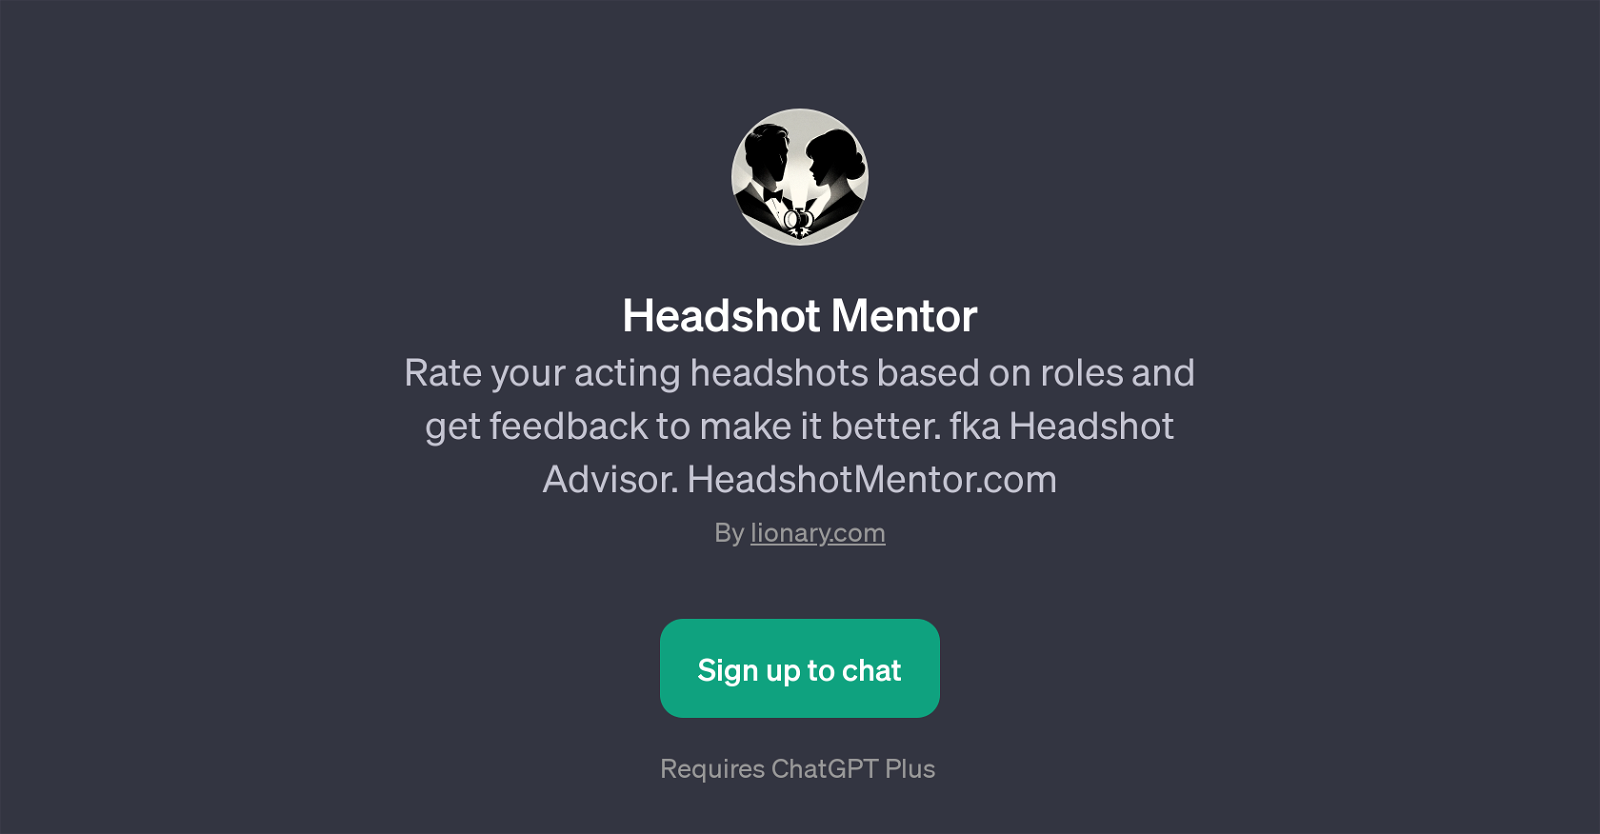 Headshot Mentor website